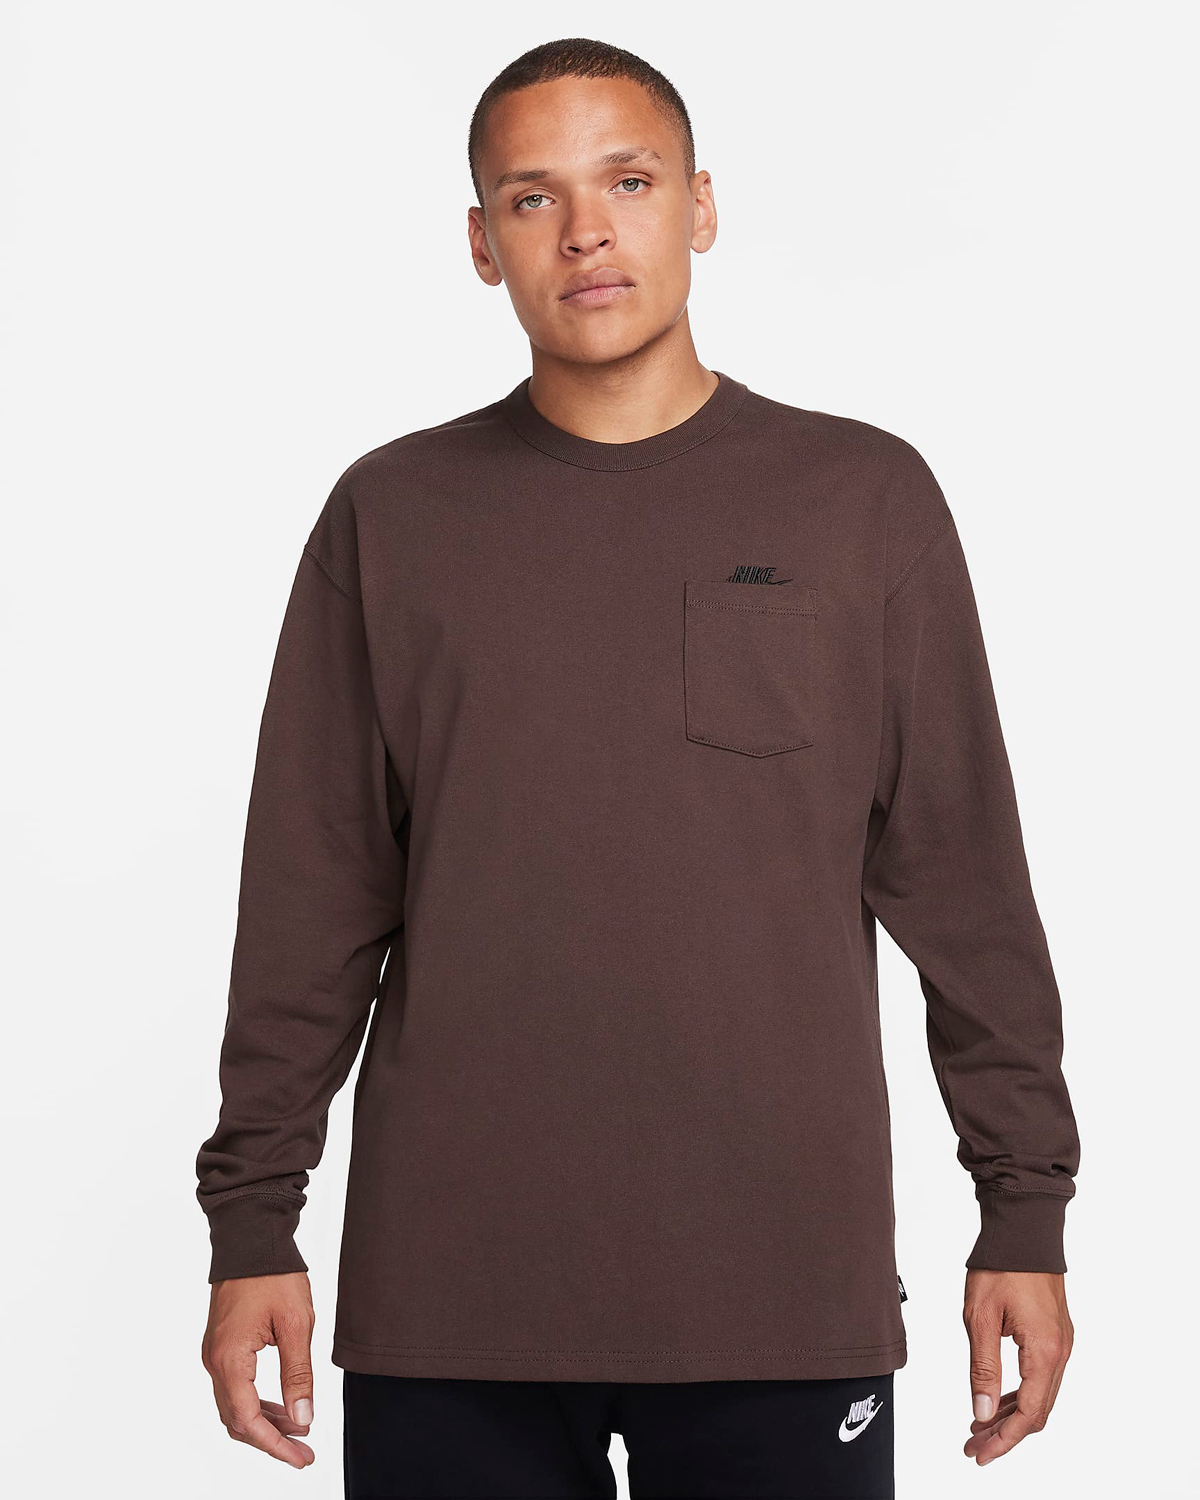 Nike-Sportswear-Premium-Long-Sleeve-Pocket-T-Shirt-Baroque-Brown